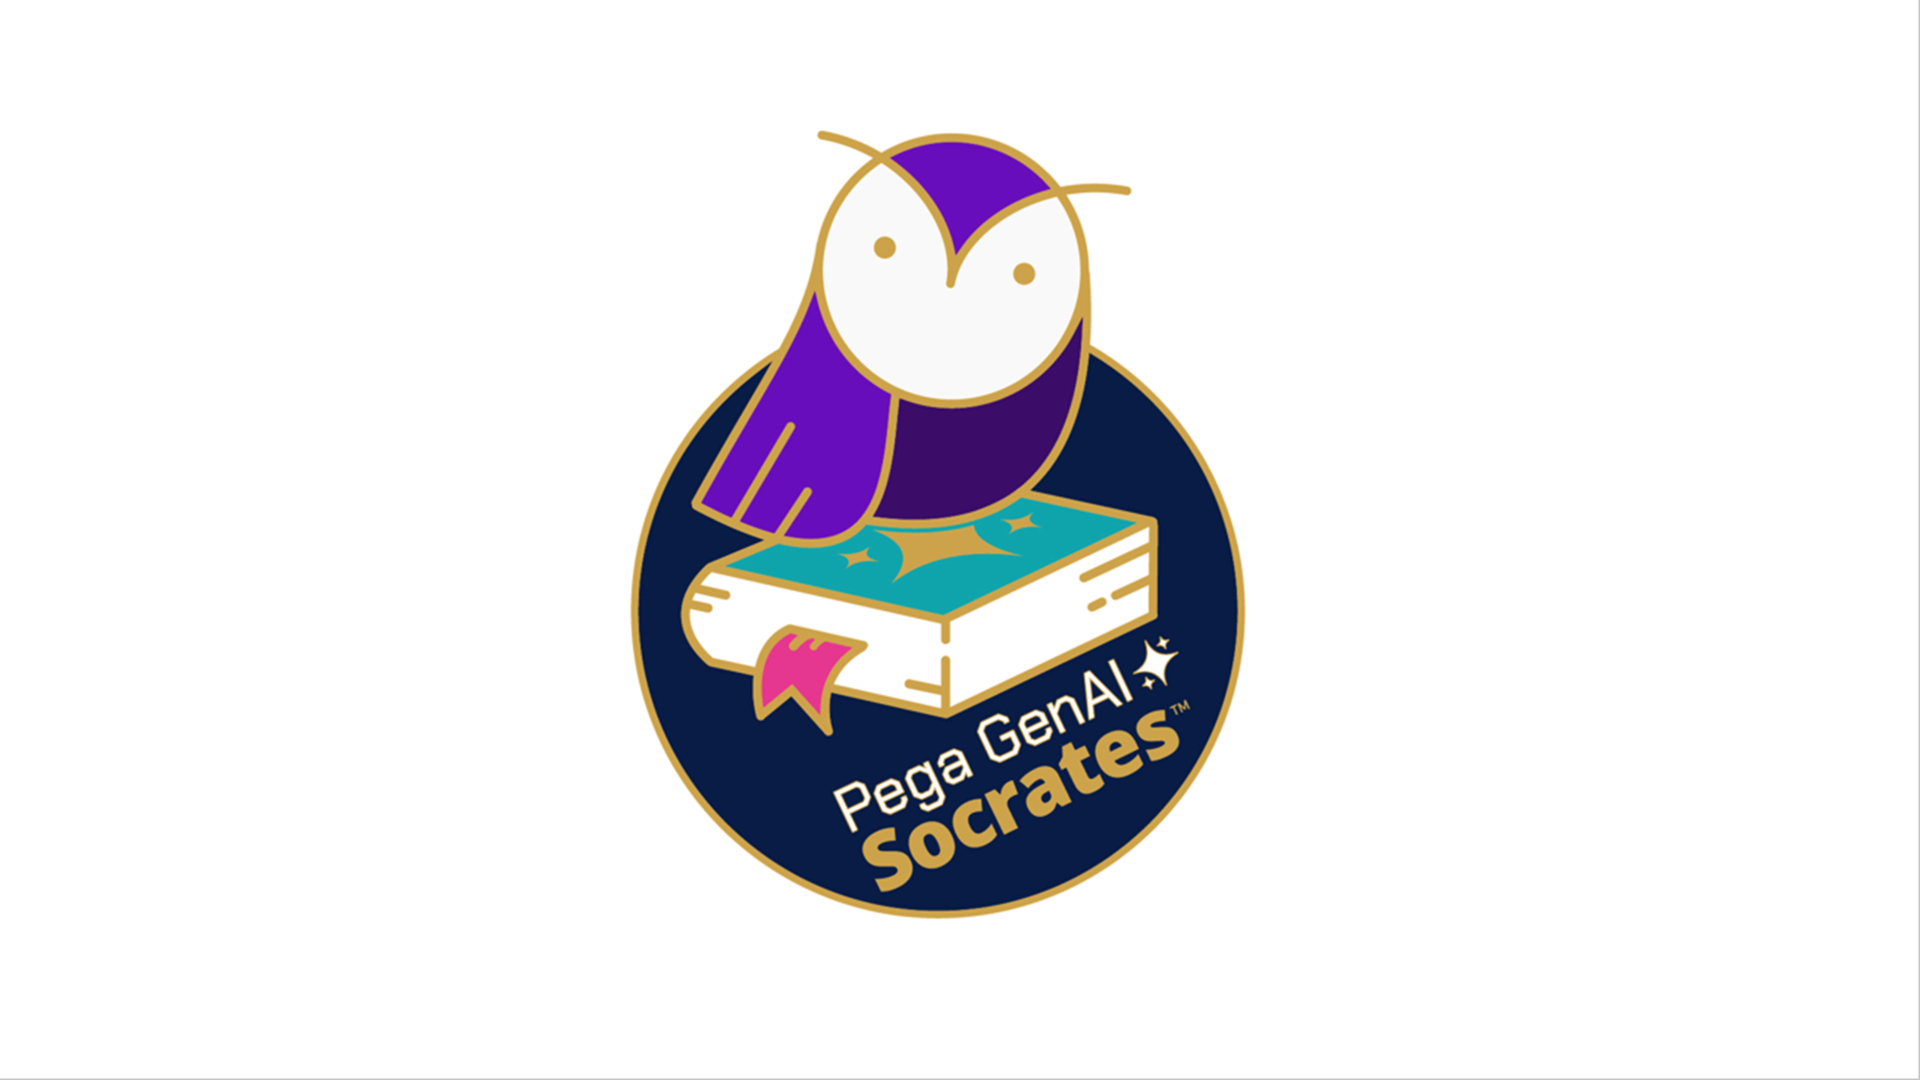 Logo for Pega GenAI Socrates service